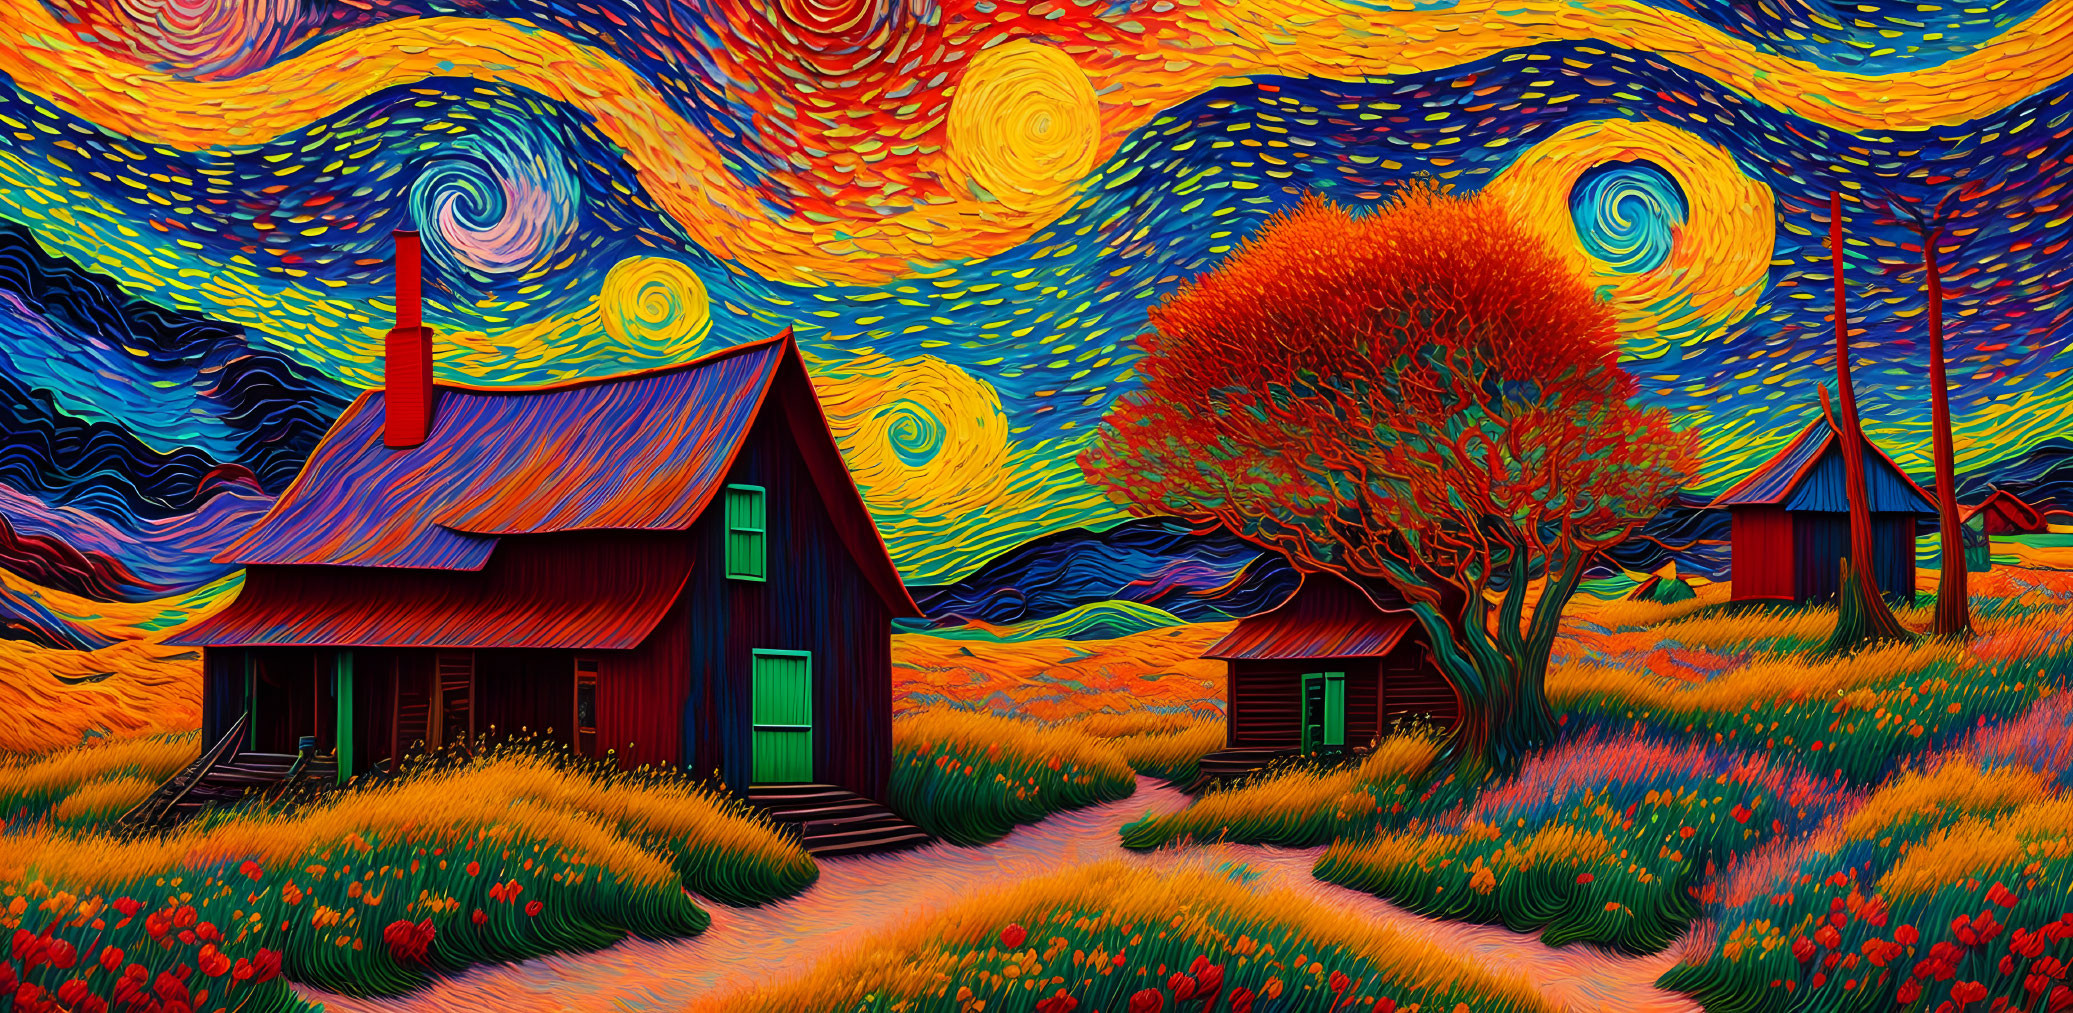 Landscape2 by Van Gogh